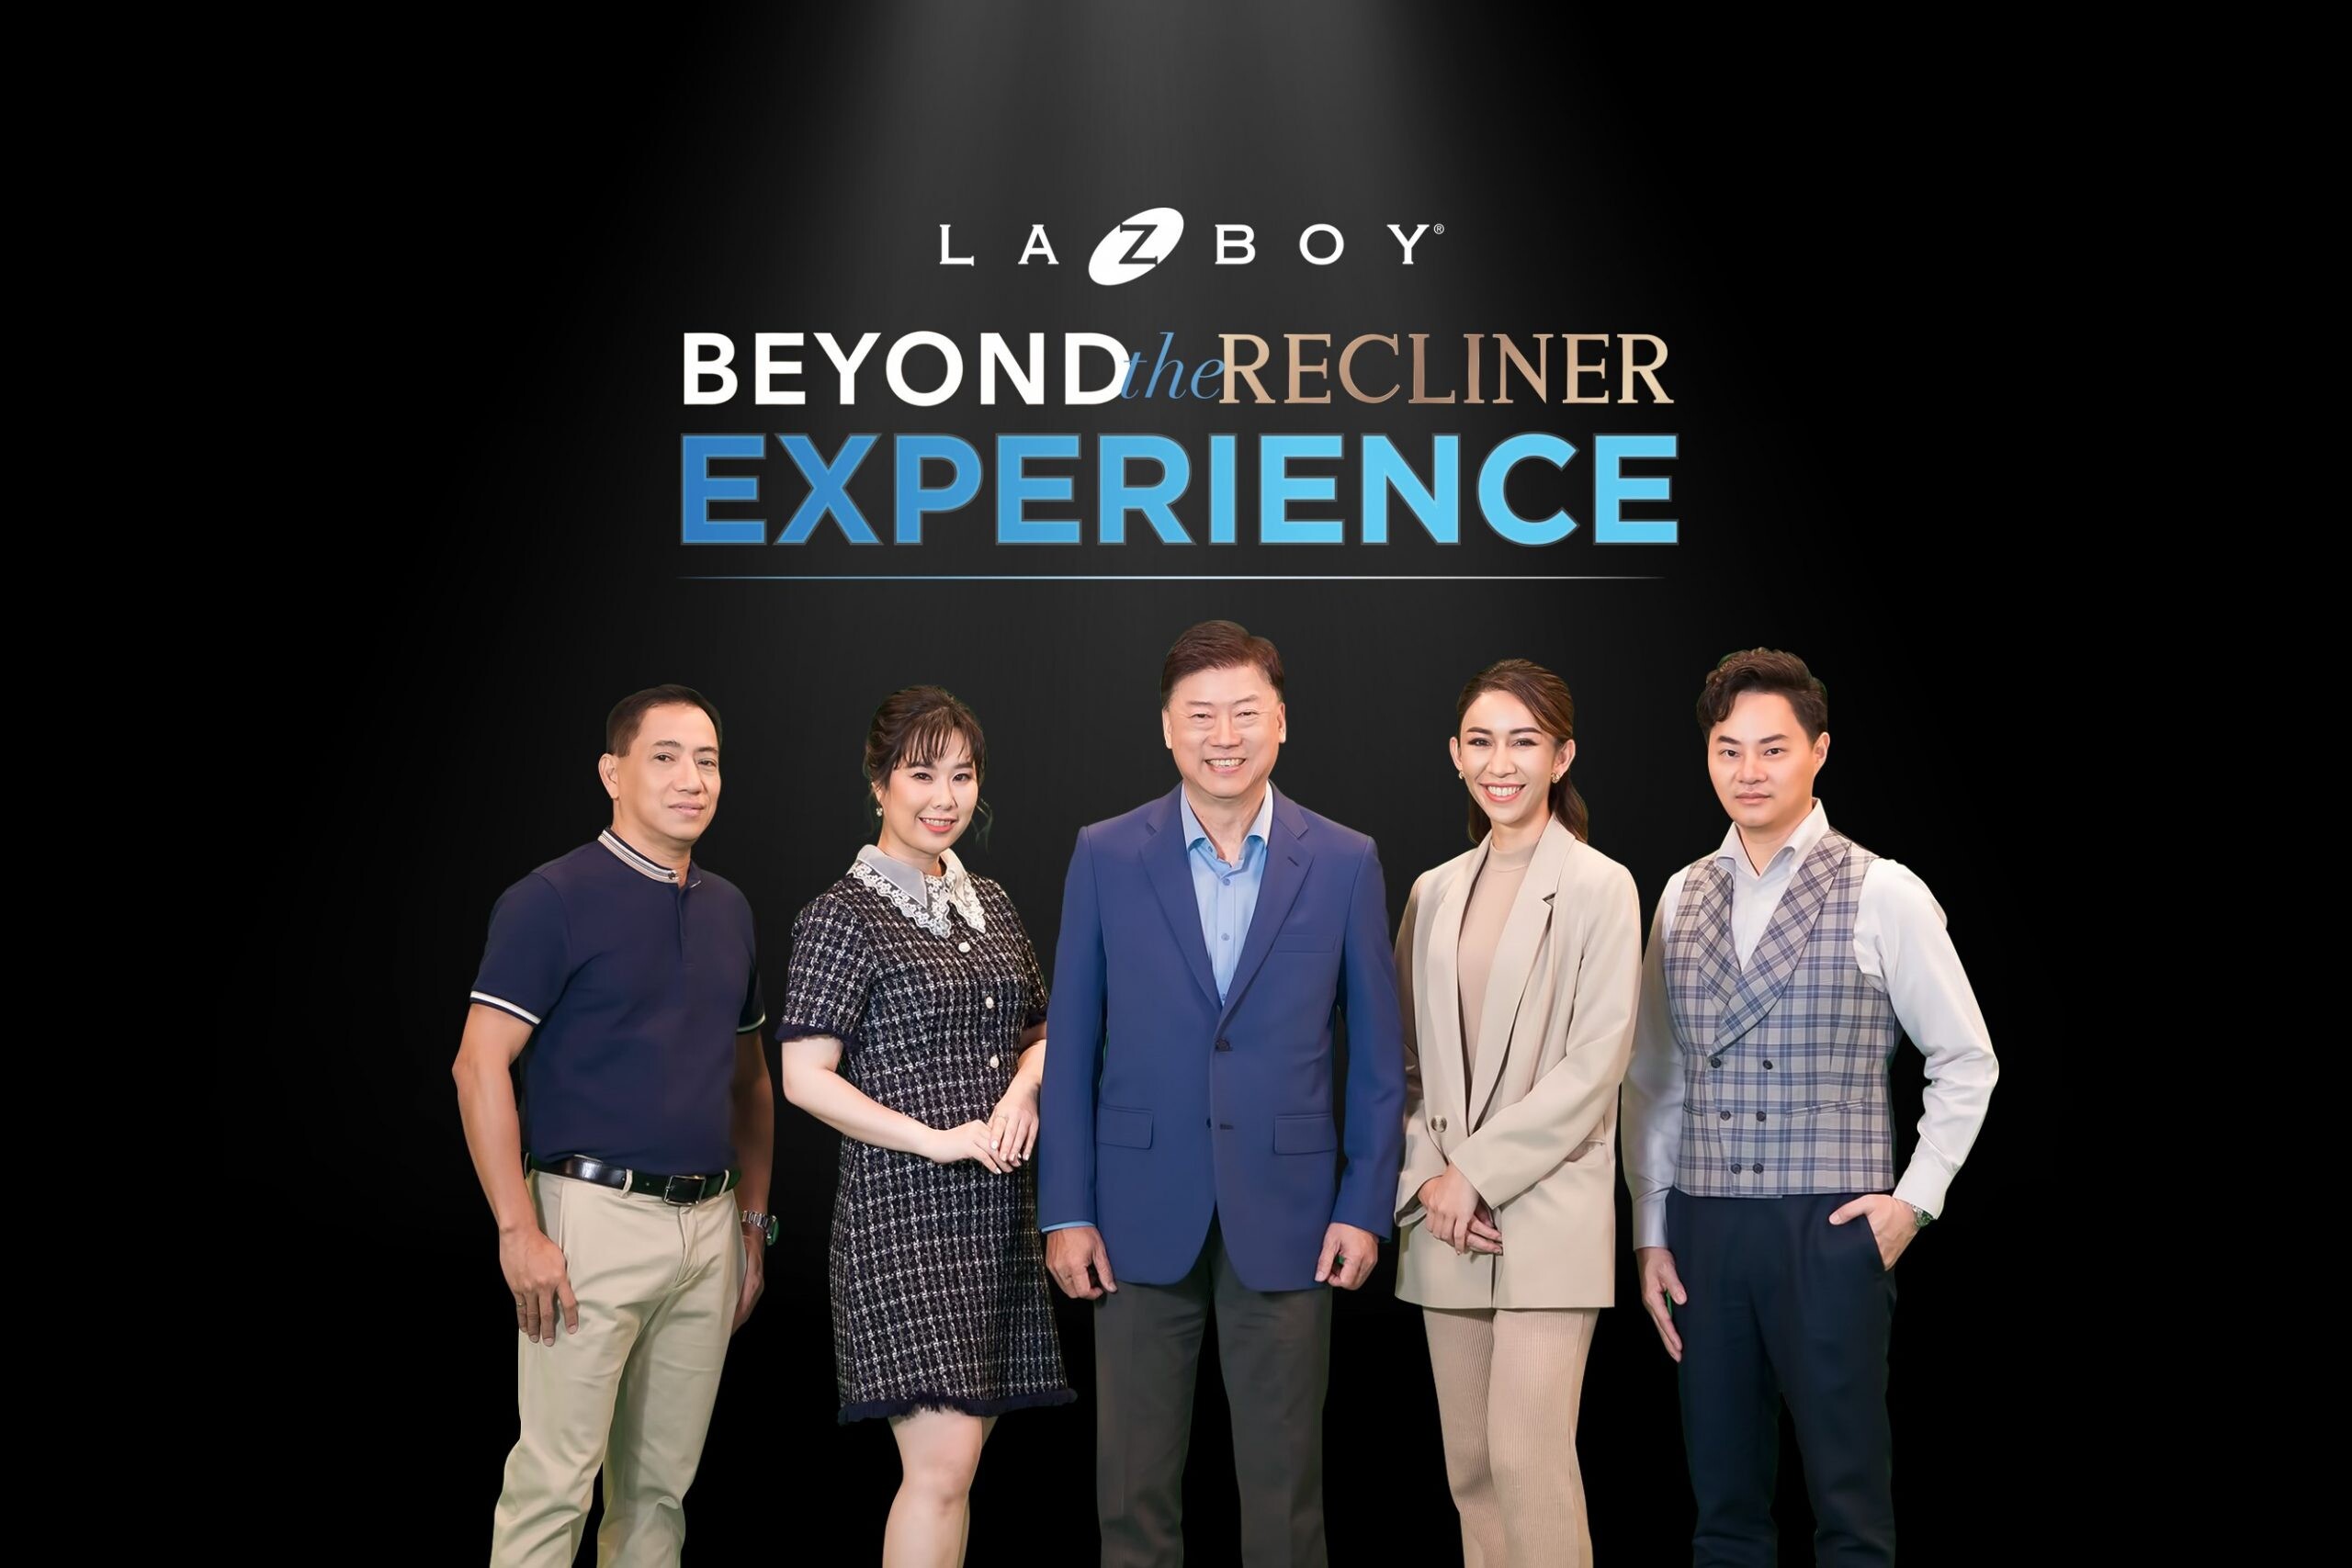 La-Z-Boy Asia เดินทัพเต็มอัตรา จัดงาน "Beyond the Recliner Experience" ประกาศความพร้อมในทุกด้าน ตอกย้ำความเป็นผู้นำตลาดเก้าอี้ปรับเอนทั่วโลก